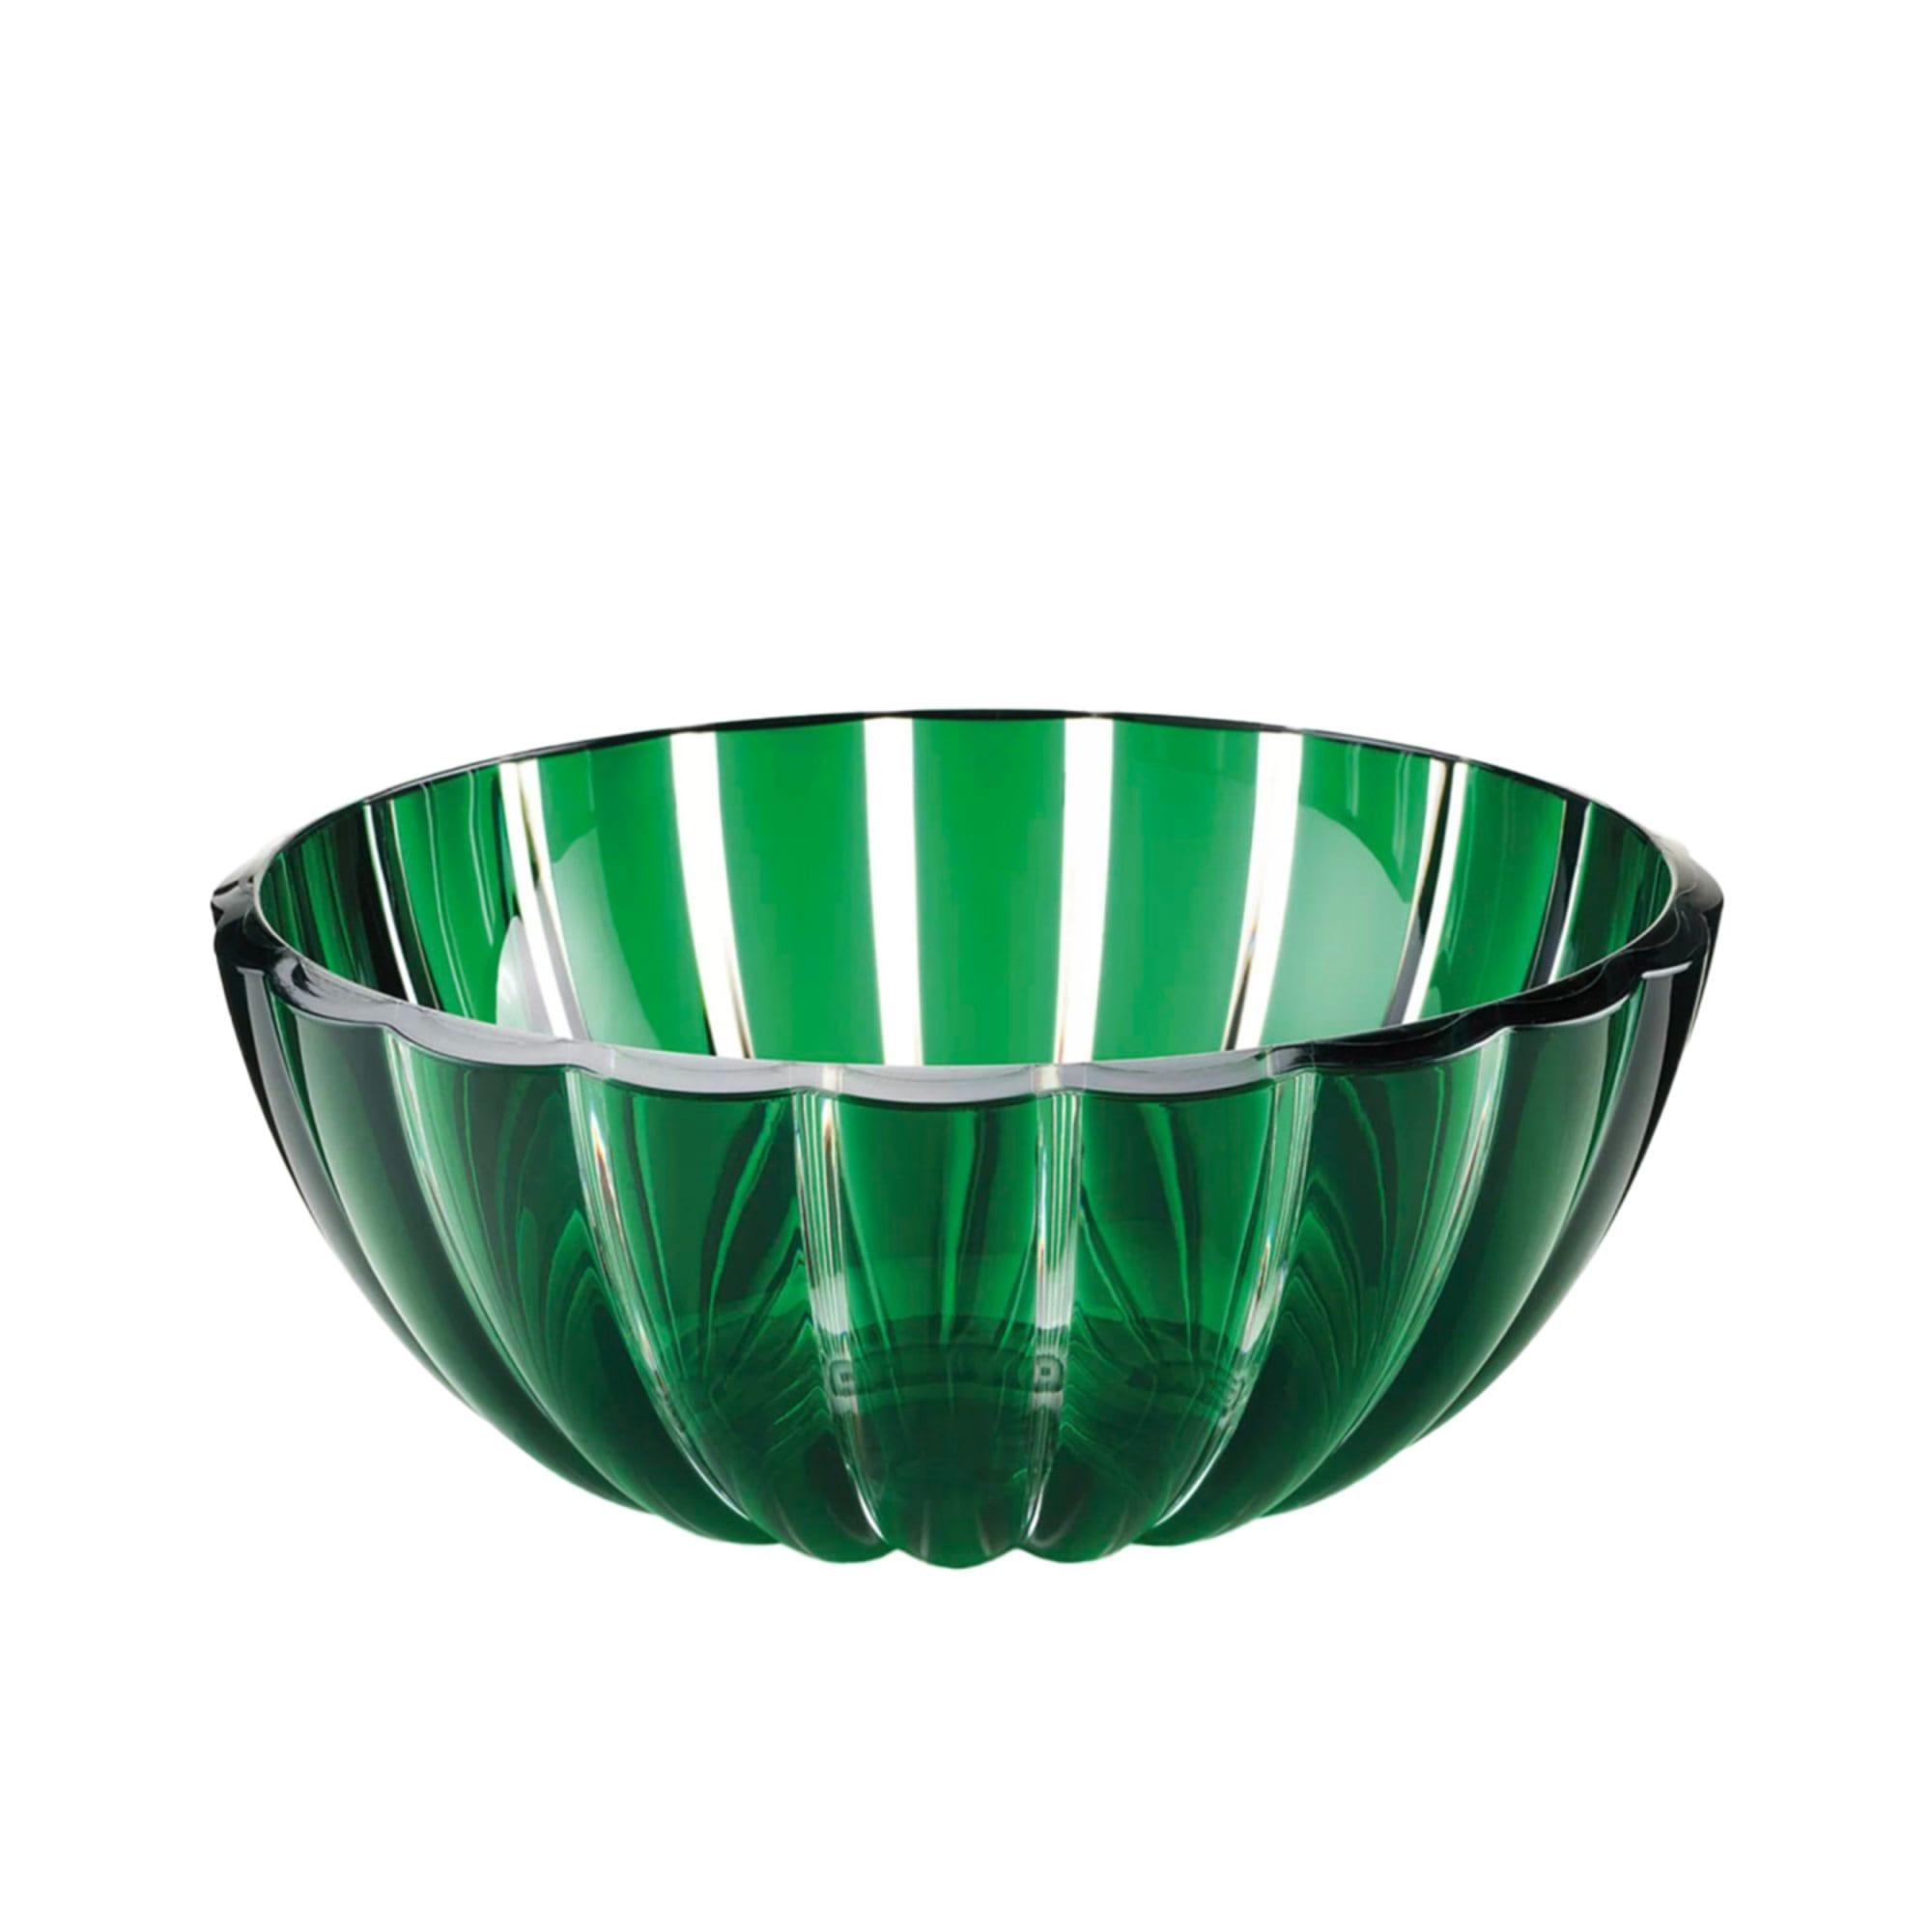 Guzzini Dolcevita Serving Bowl 30cm Emerald Image 1